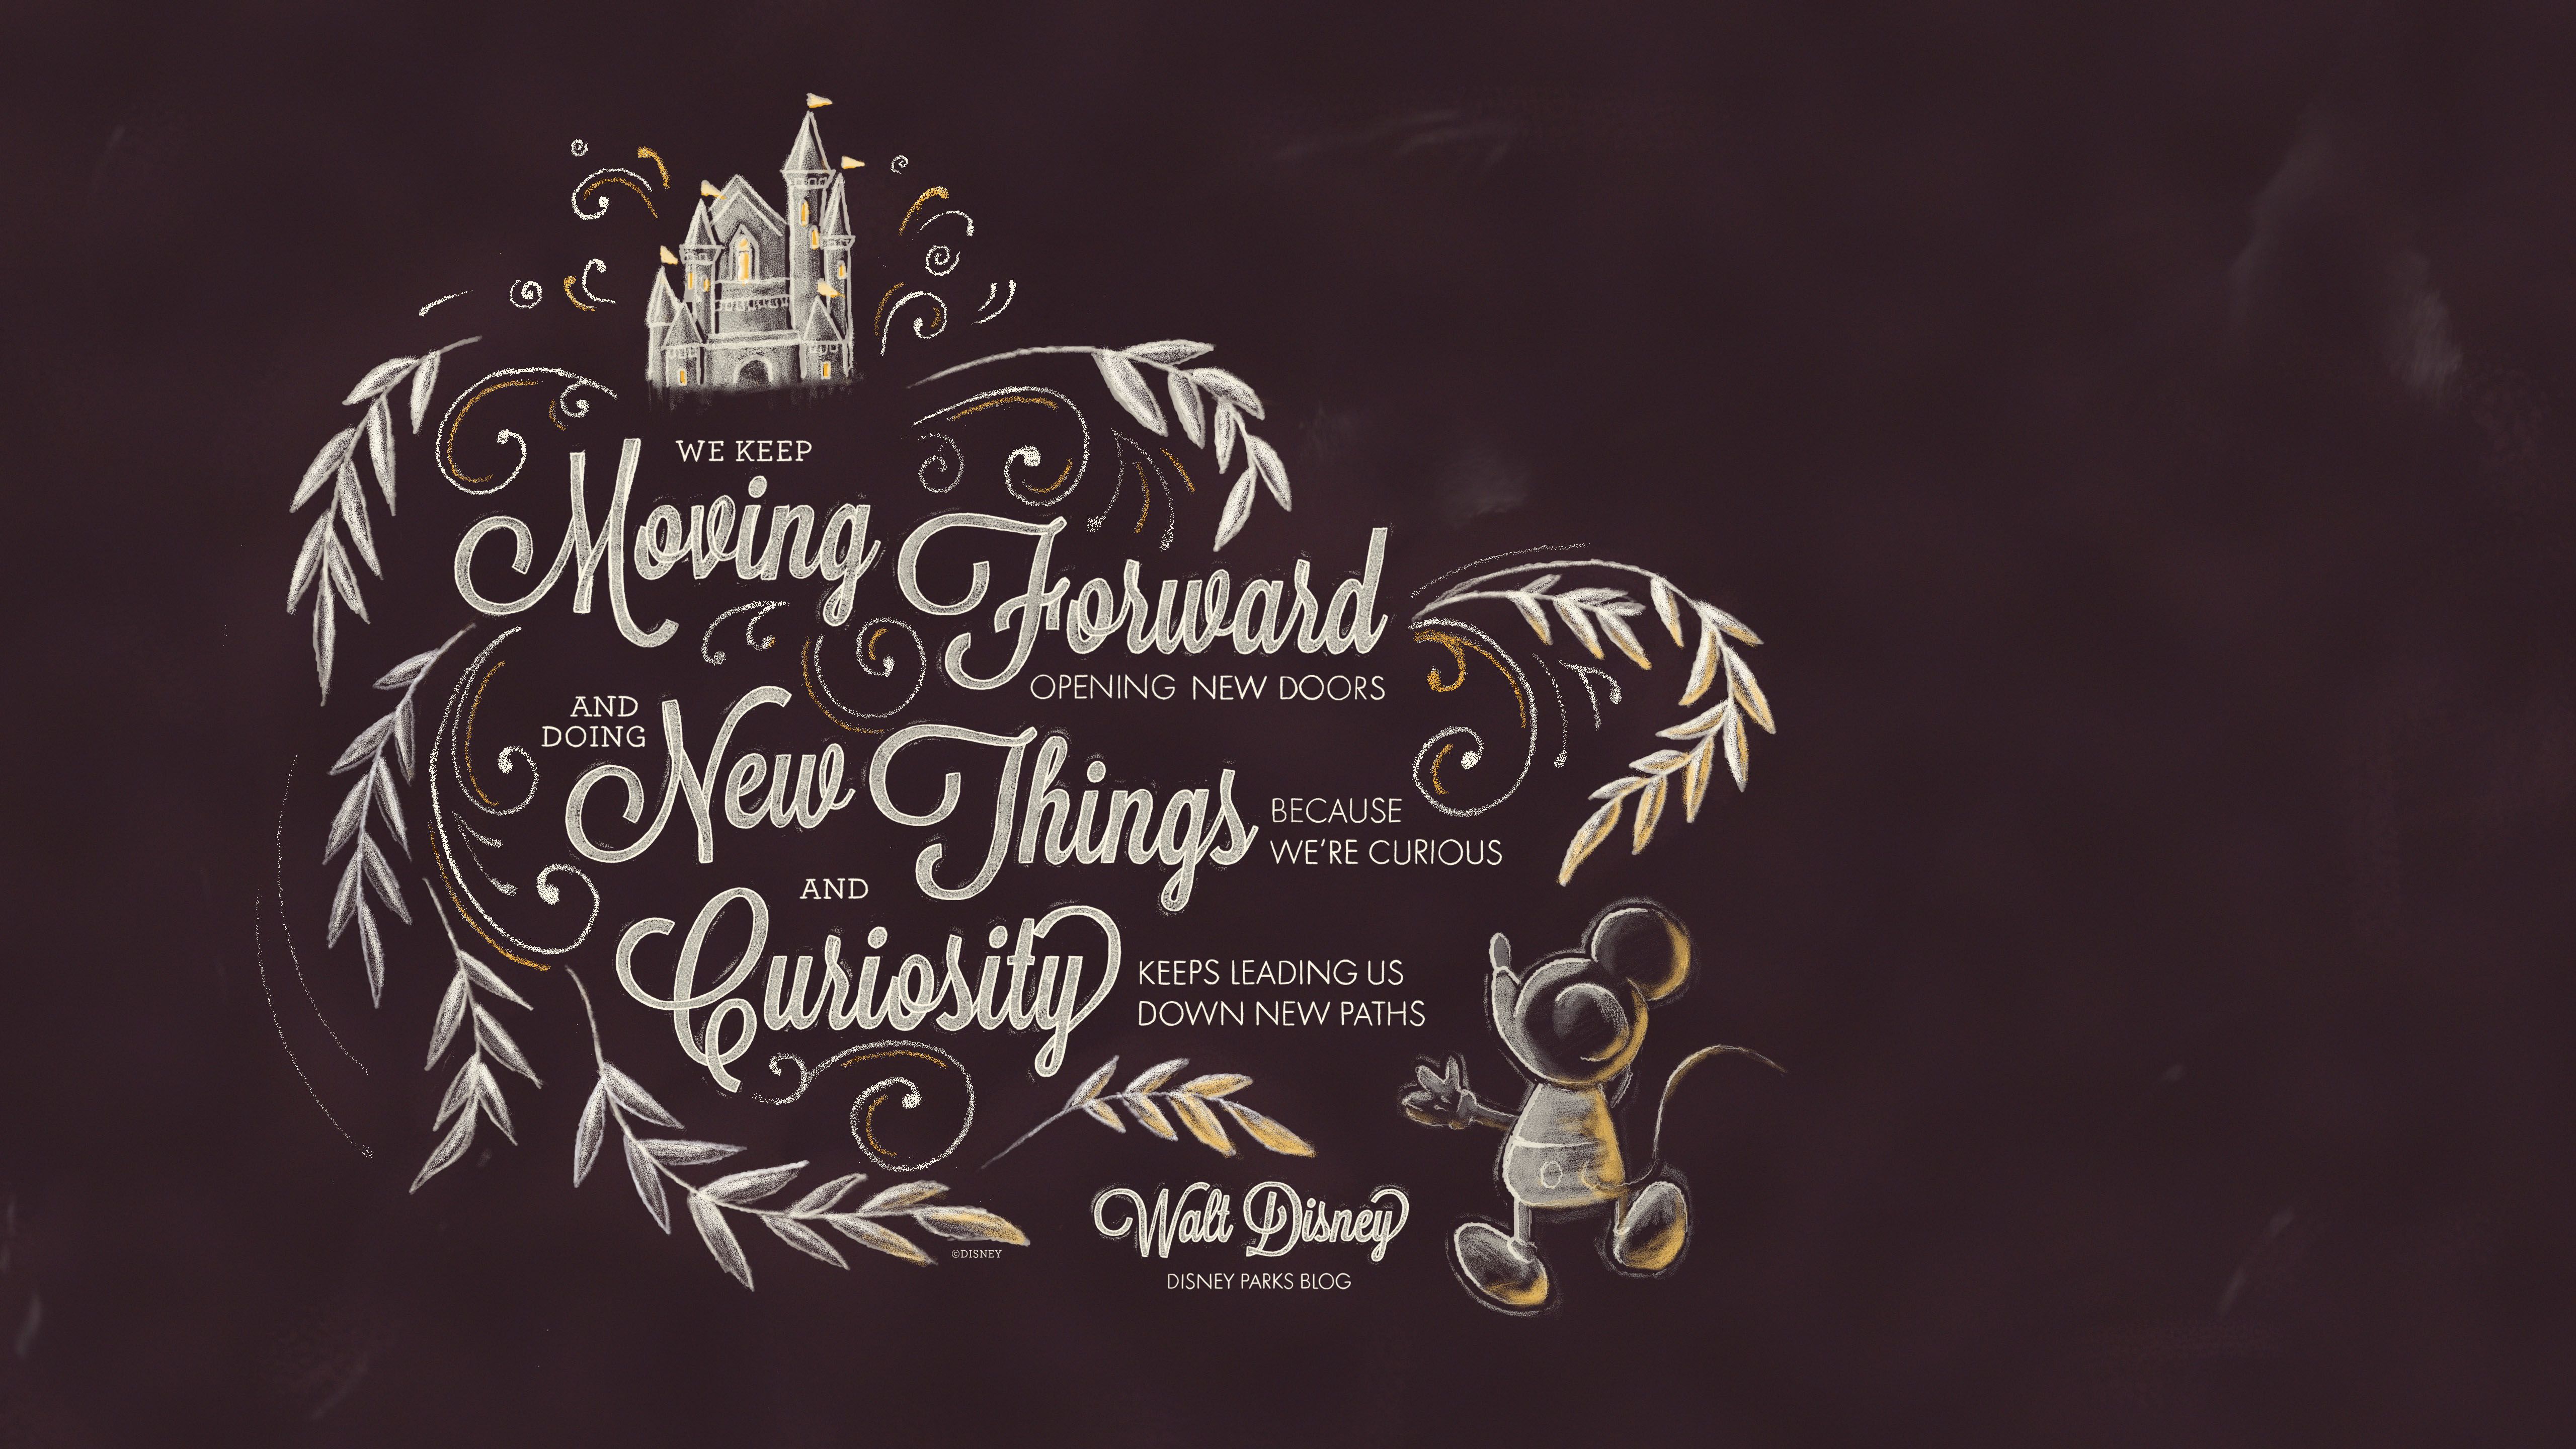 Exclusive: Walt Disney Desktop Mobile Wallpaper. Disney Parks Blog